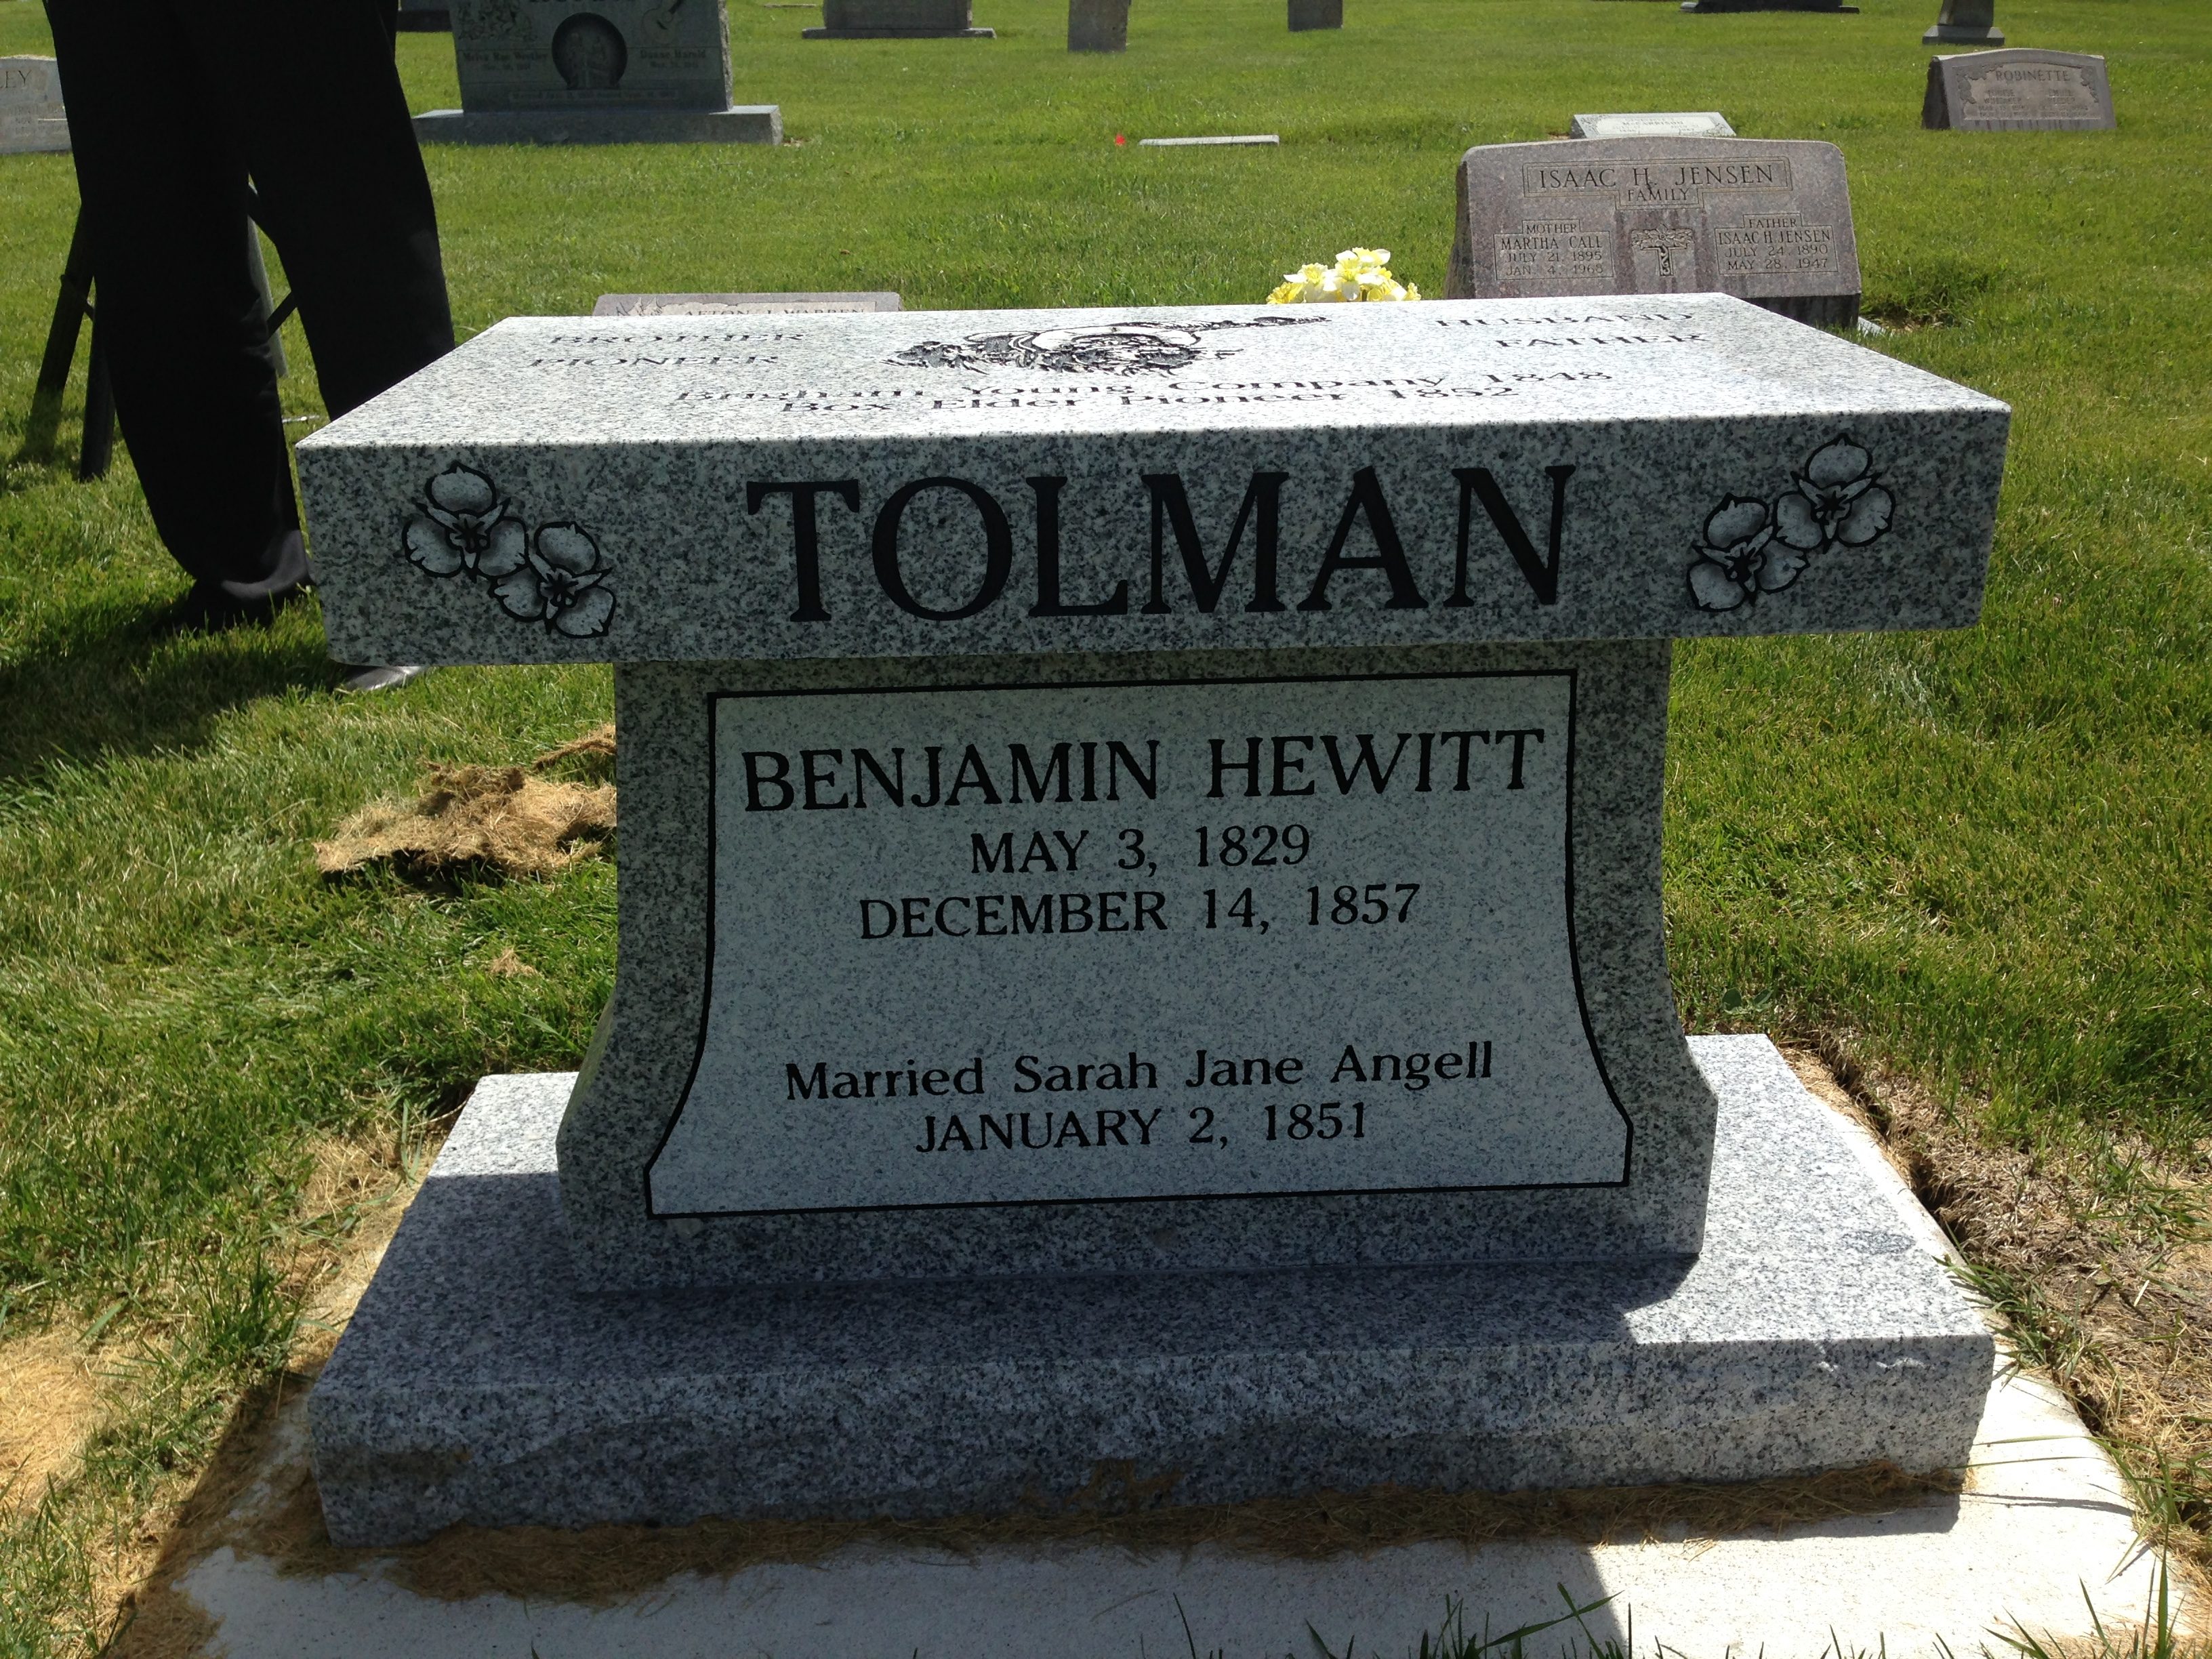 Memorial for Benjamin Hewitt Tolman